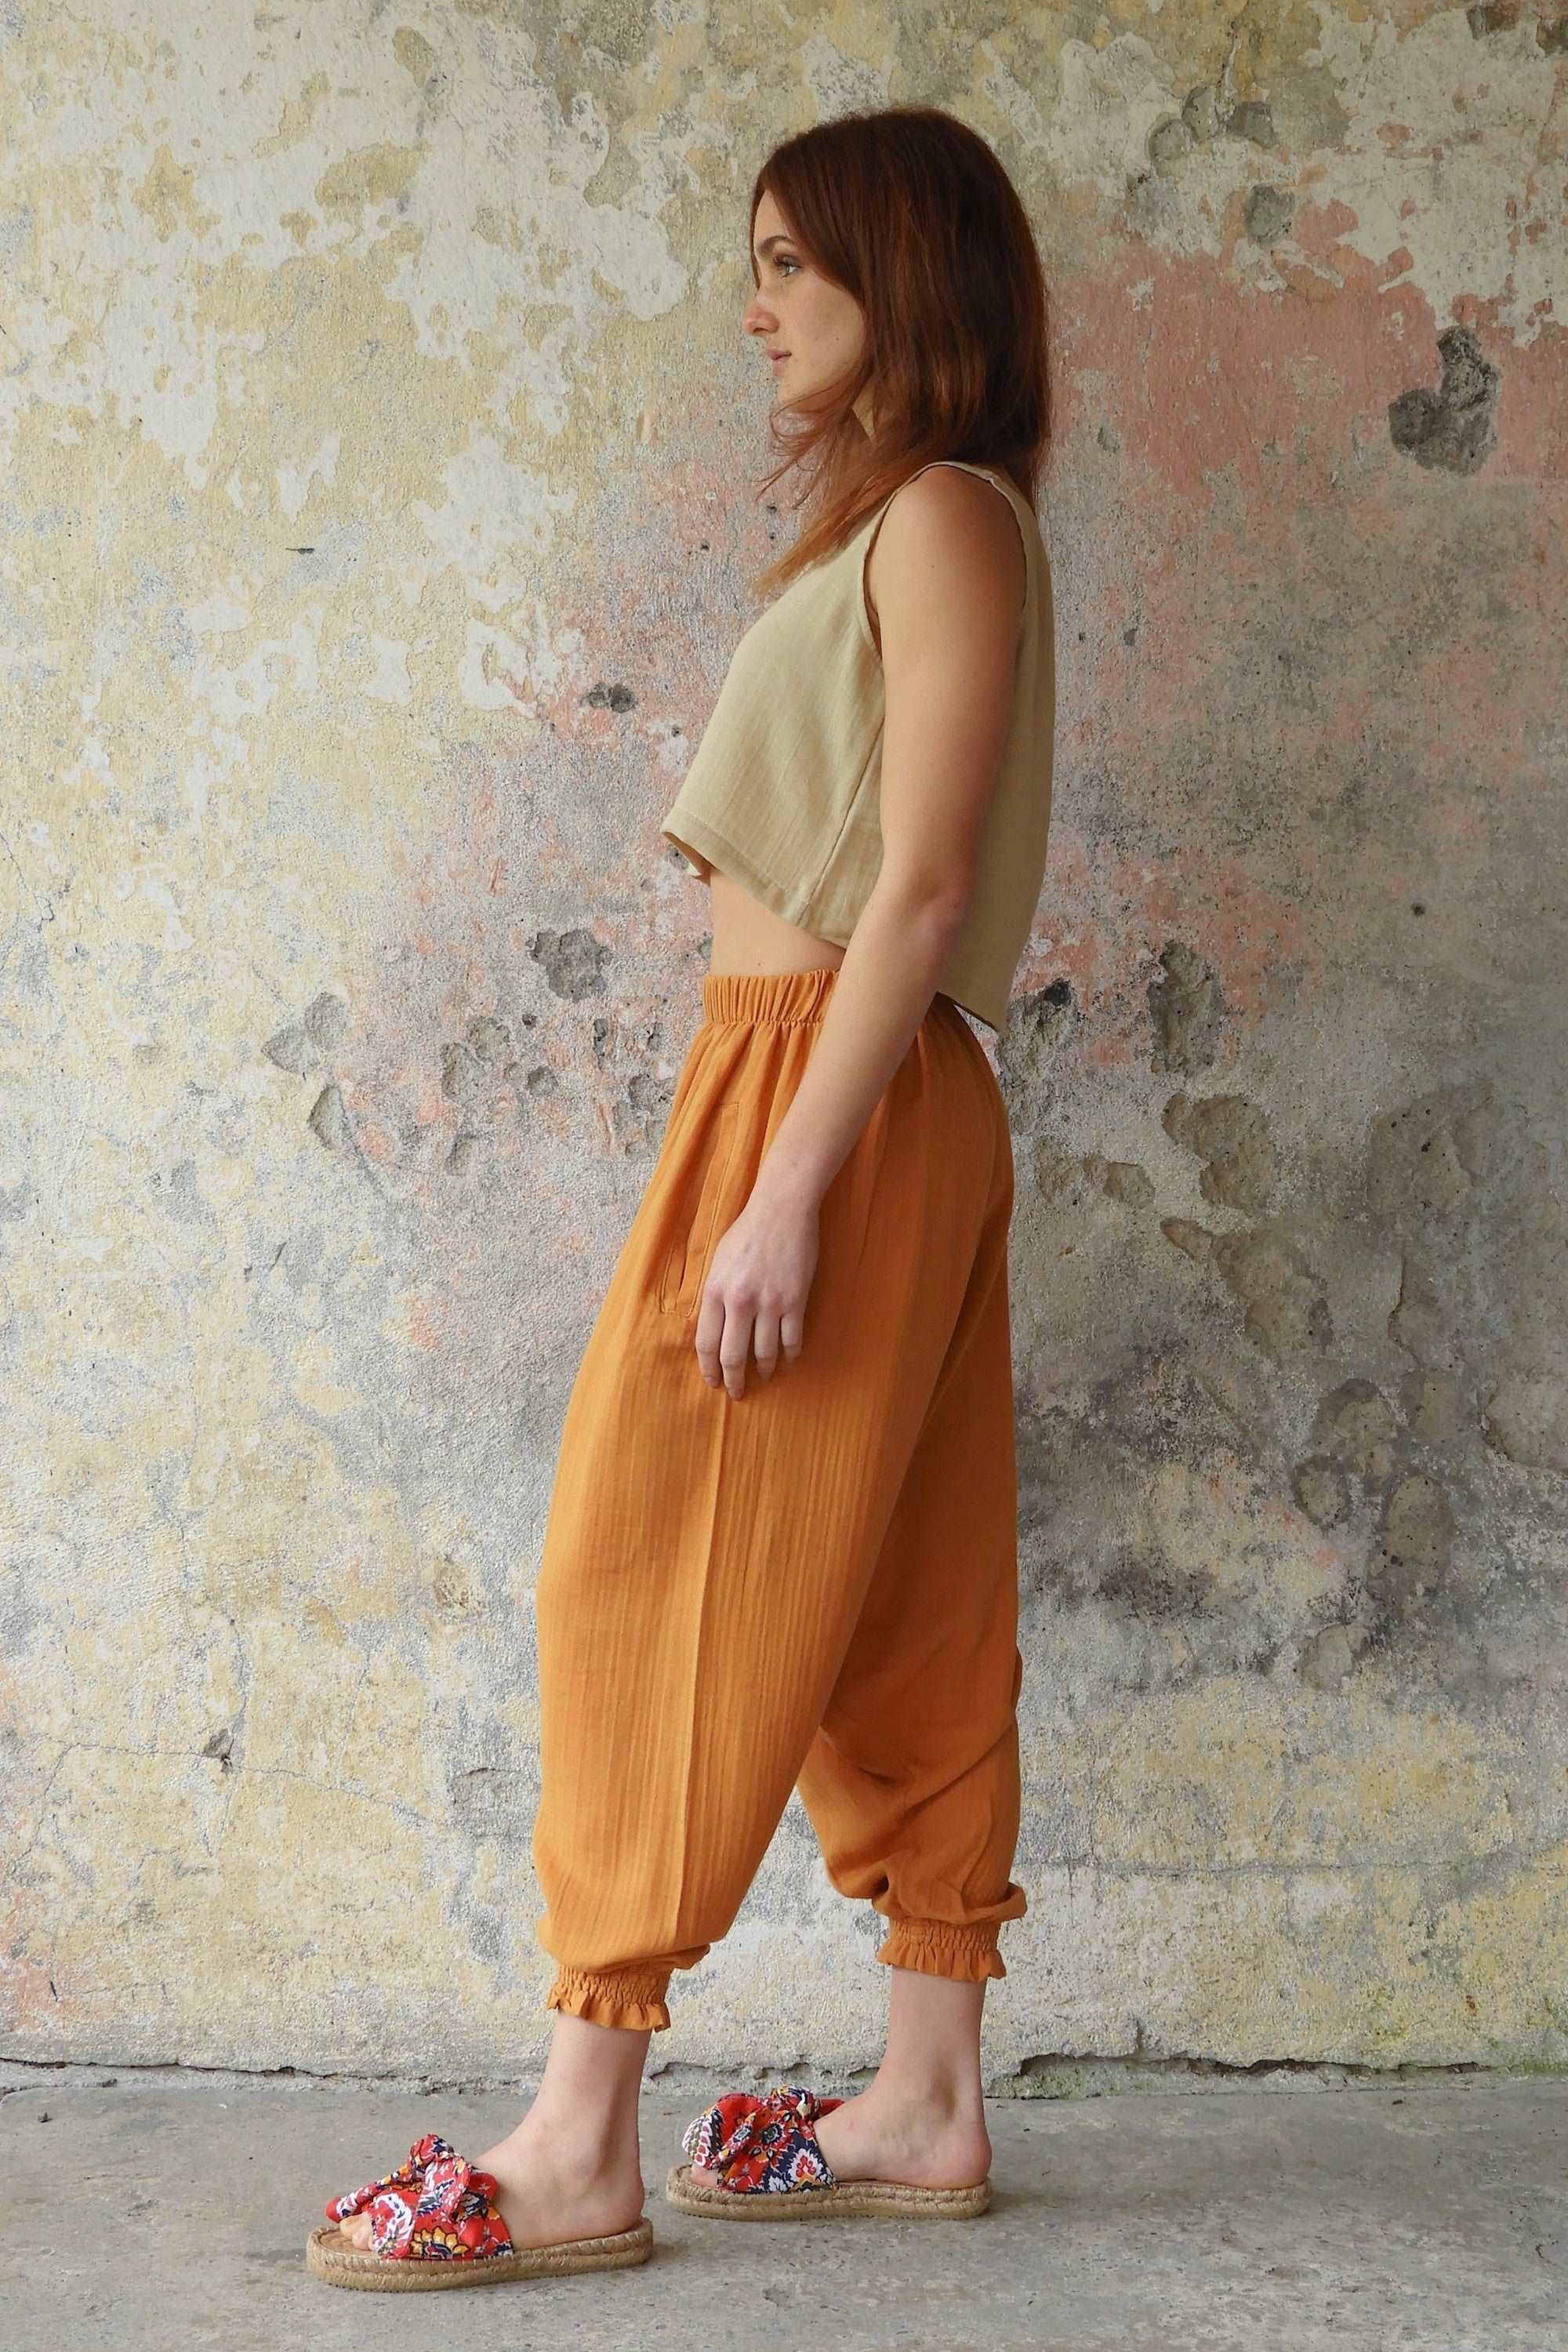 Sustainable  | GAIA Women's Gauze Cotton Harem Pants (Light Blue, Mint, Orange) by Odana's